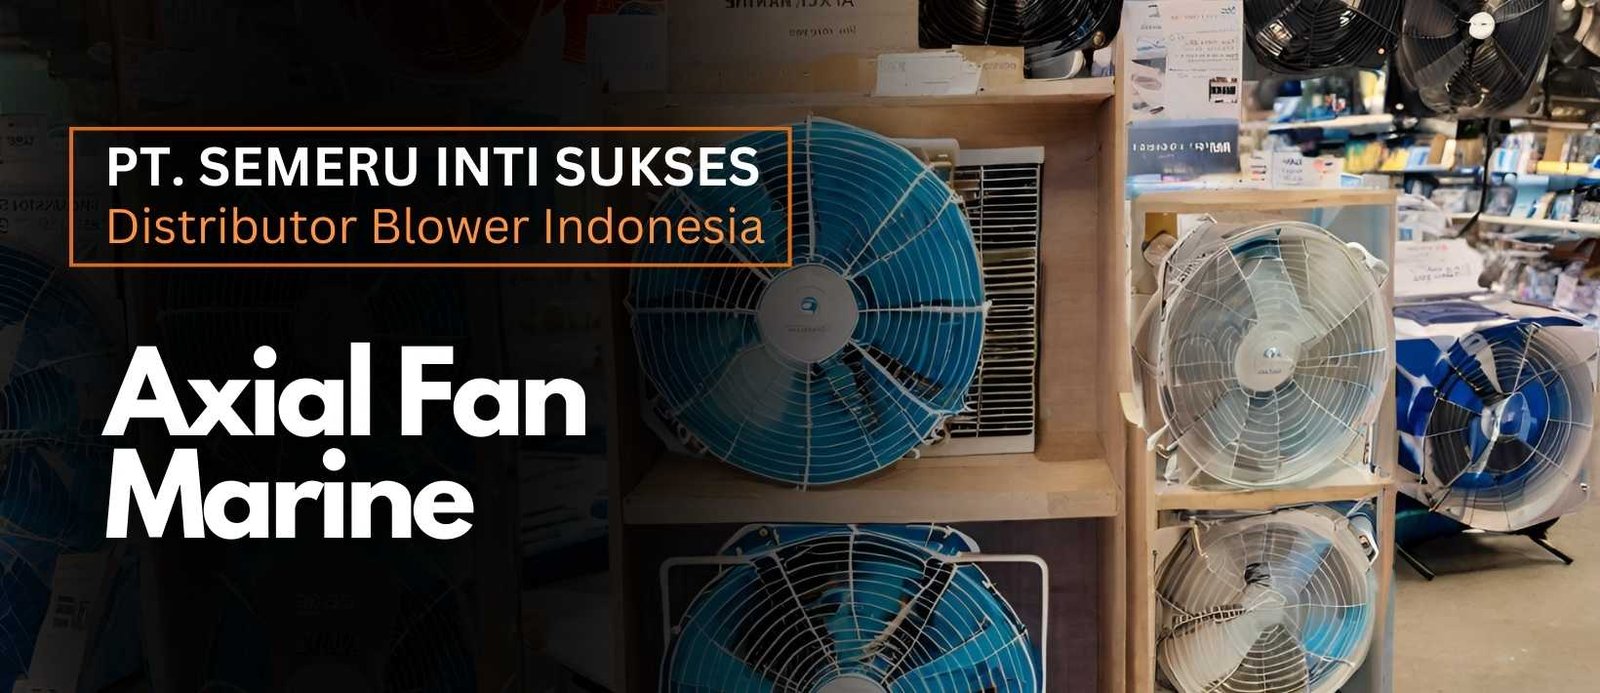 axial marine fan, fungsi axial fan, axial fan, axial fan adalah, axial fan blower, blower axial fan, fan axial, jual blower surabaya, jual kipas angin surabaya, distributor blower, distributor blower surabaya, distributor blower indonesia, suplier blower surabaya, blower surabaya, centrifugal blower surabaya, distributor exhaust fan, jual exhaust fan, jual exhaust fan surabaya, distributor exhaust fan surabaya, jual blower, jual blower di surabaya, jual blower murah, jual kipas angin, jual blower industri, jual blower pabrik, kitchen hood, blower industri, blower industrial, kipas angin industri, kipas angin pabrik,